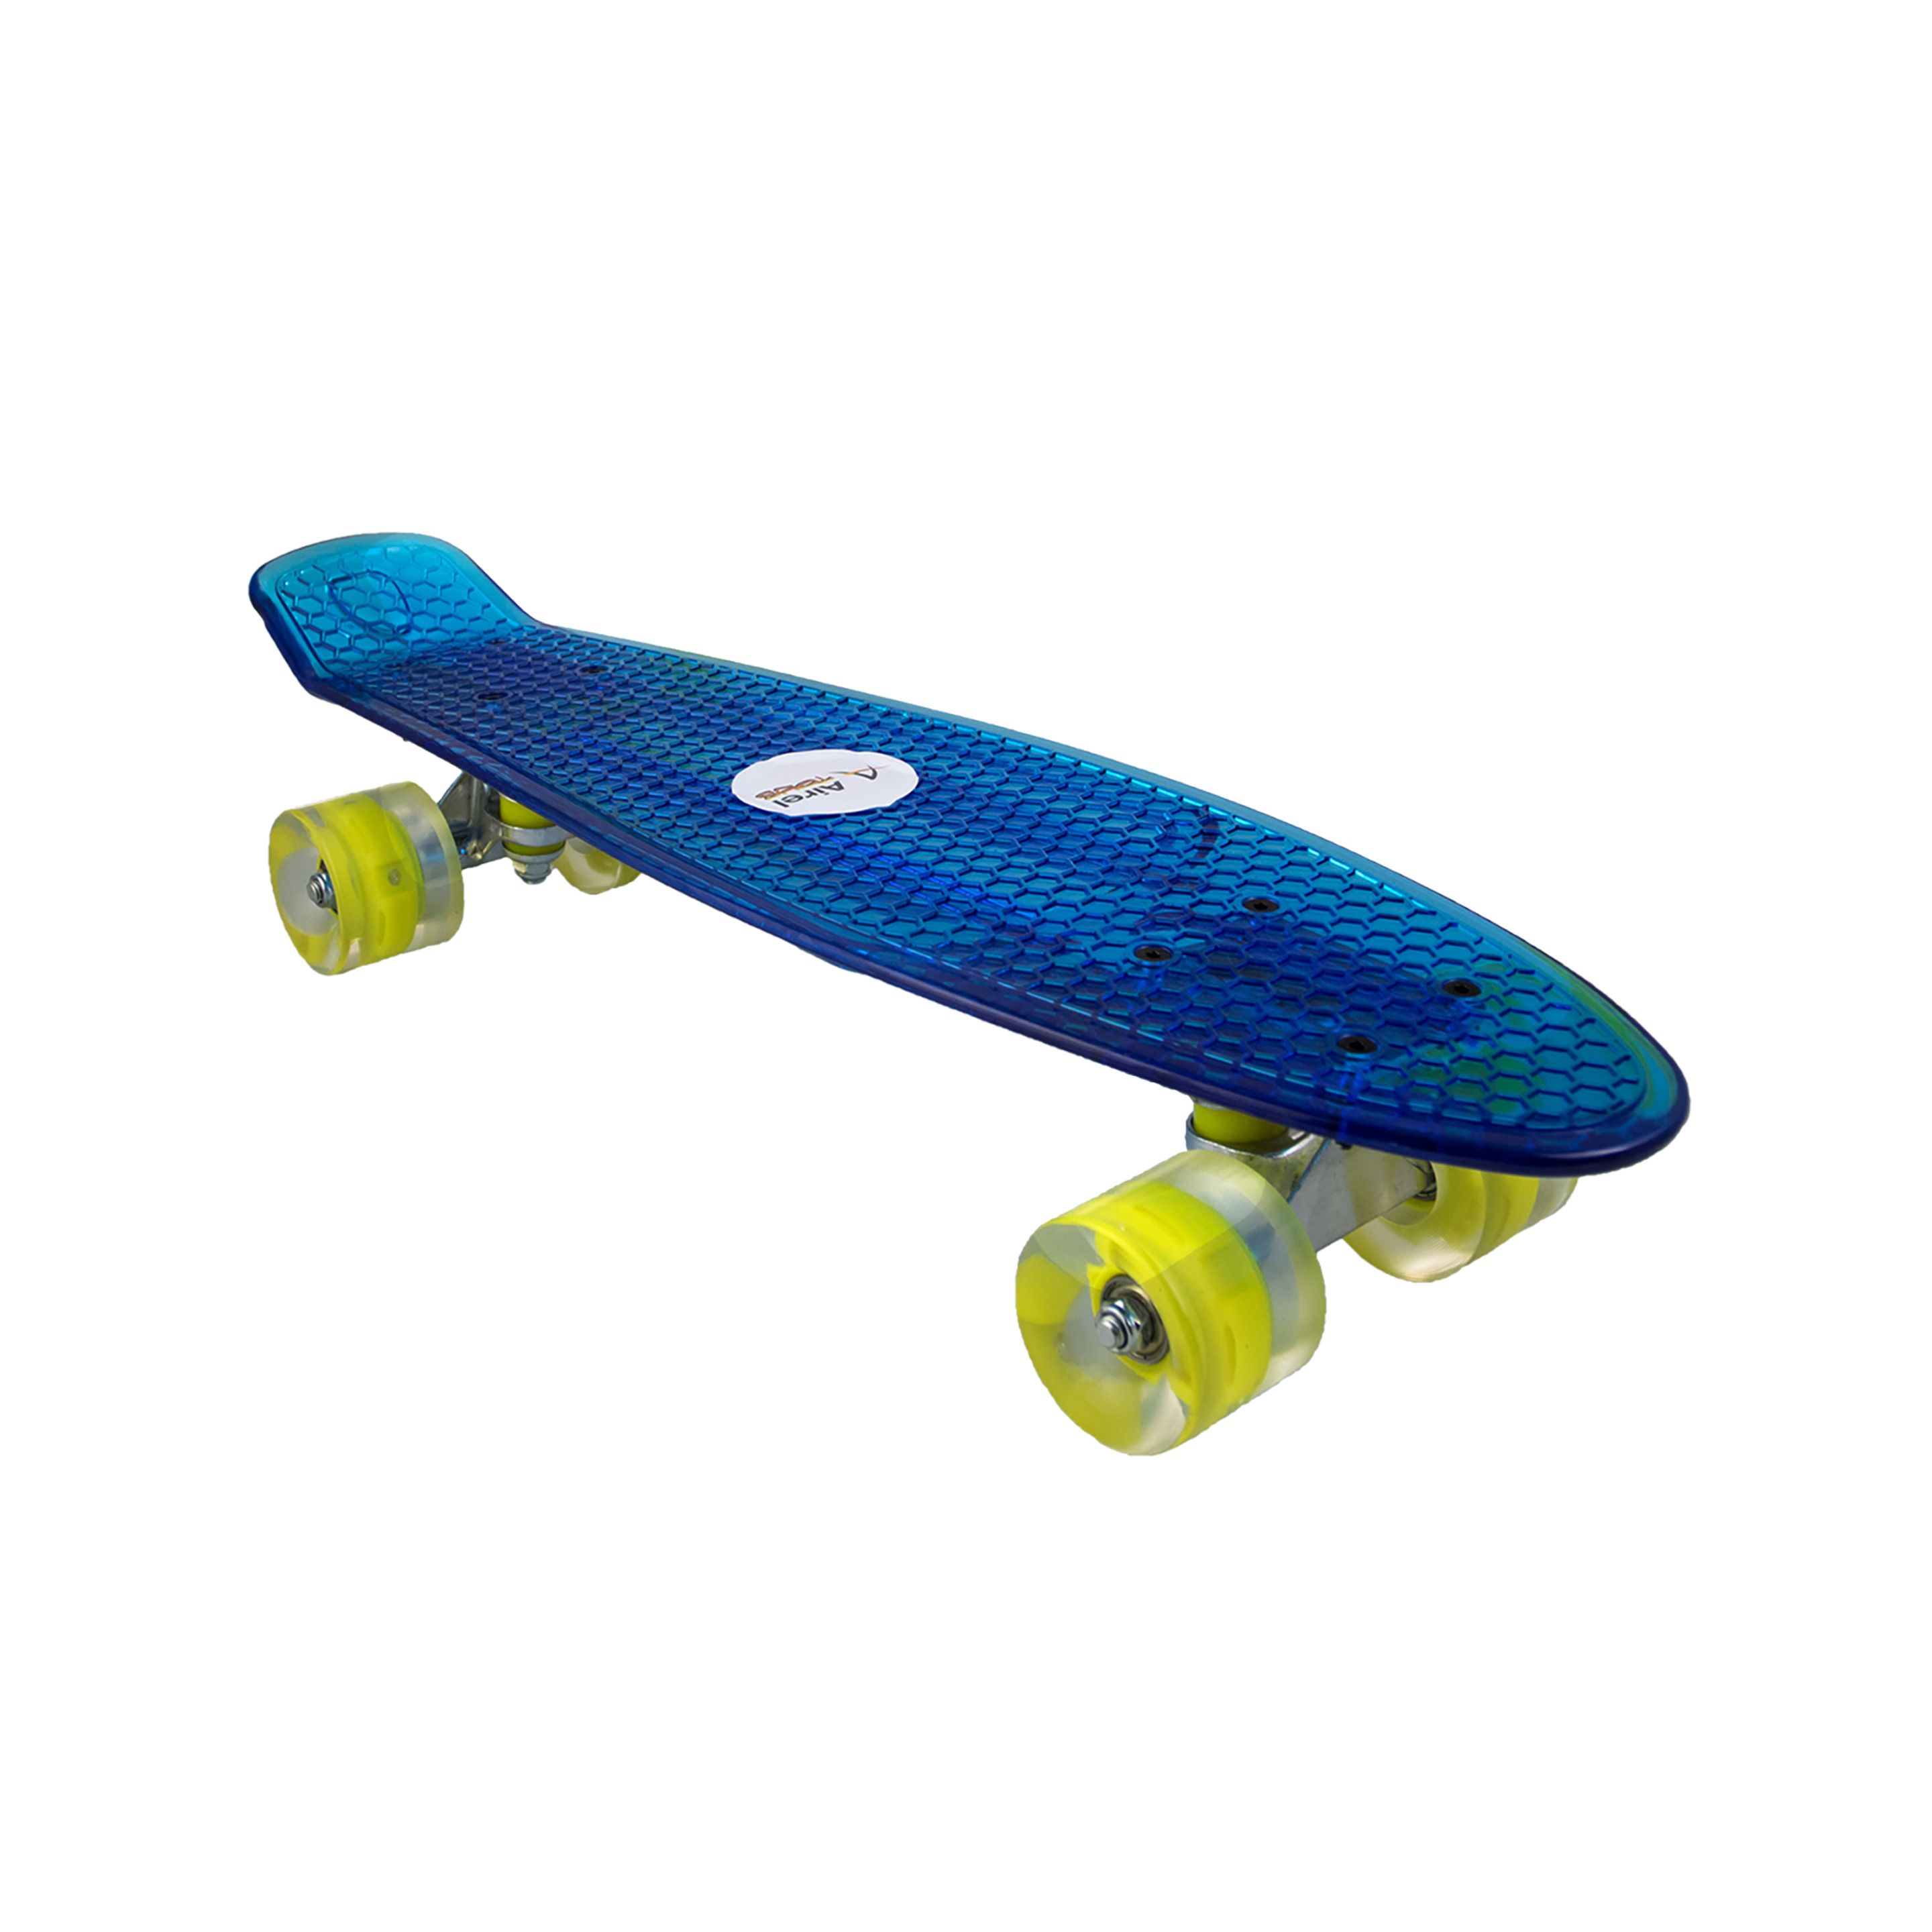 Skateboard Monopatin Airel, Skate 4 Ruedas Con Rodamientos